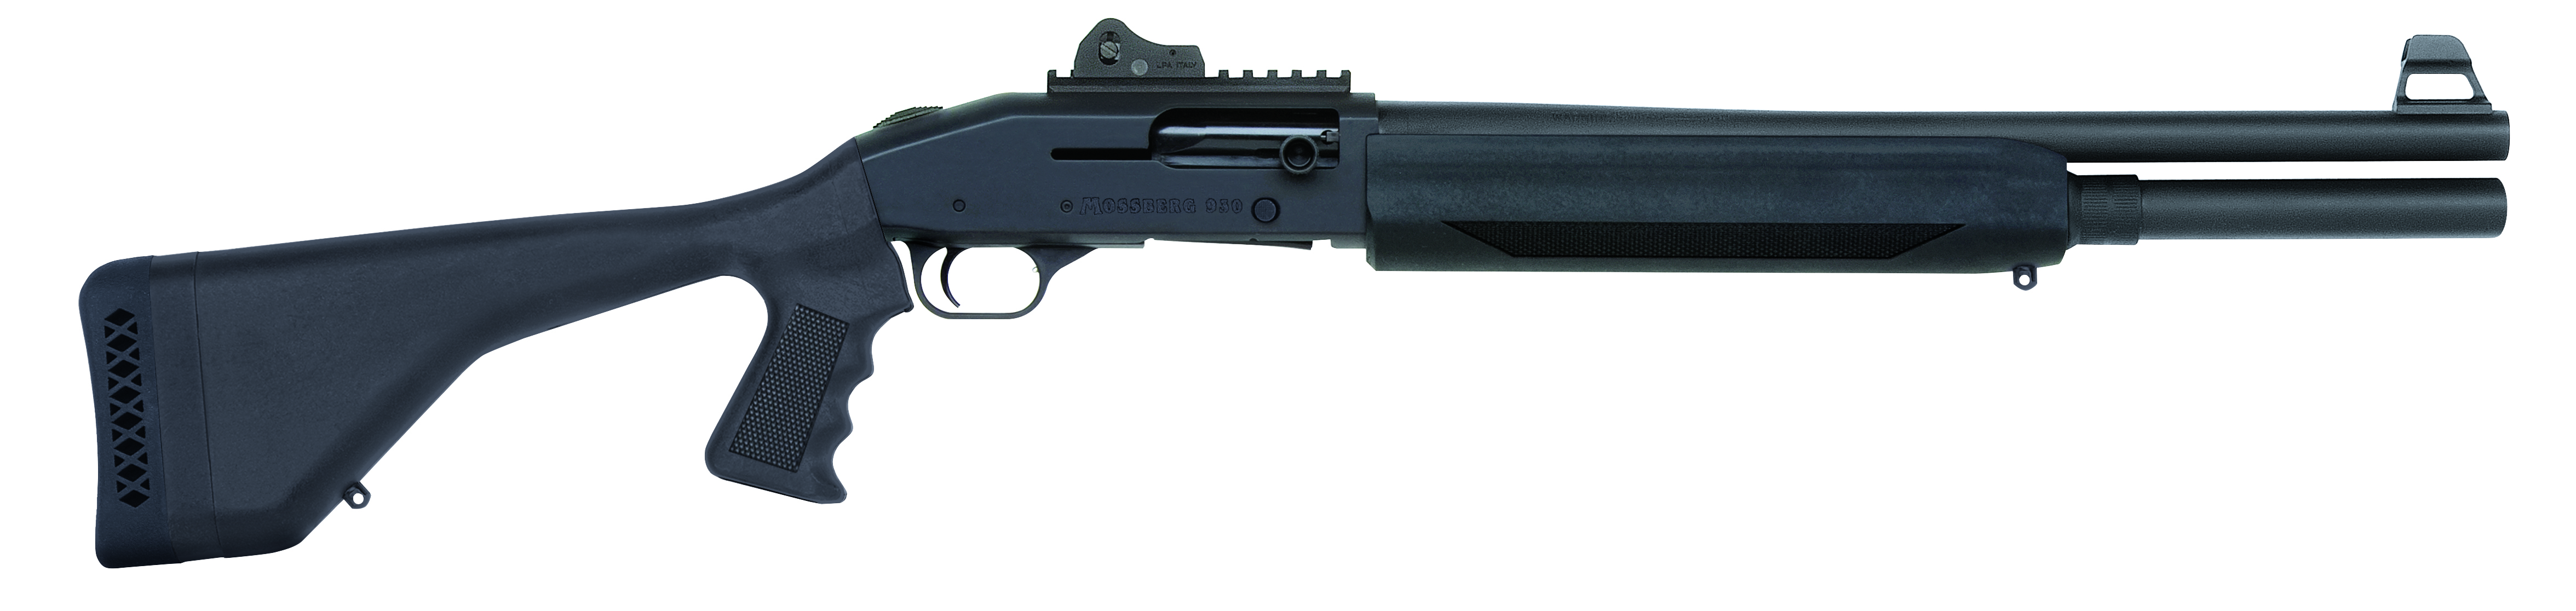 Mossberg 930 SPX Pistol Grip-8 Shot